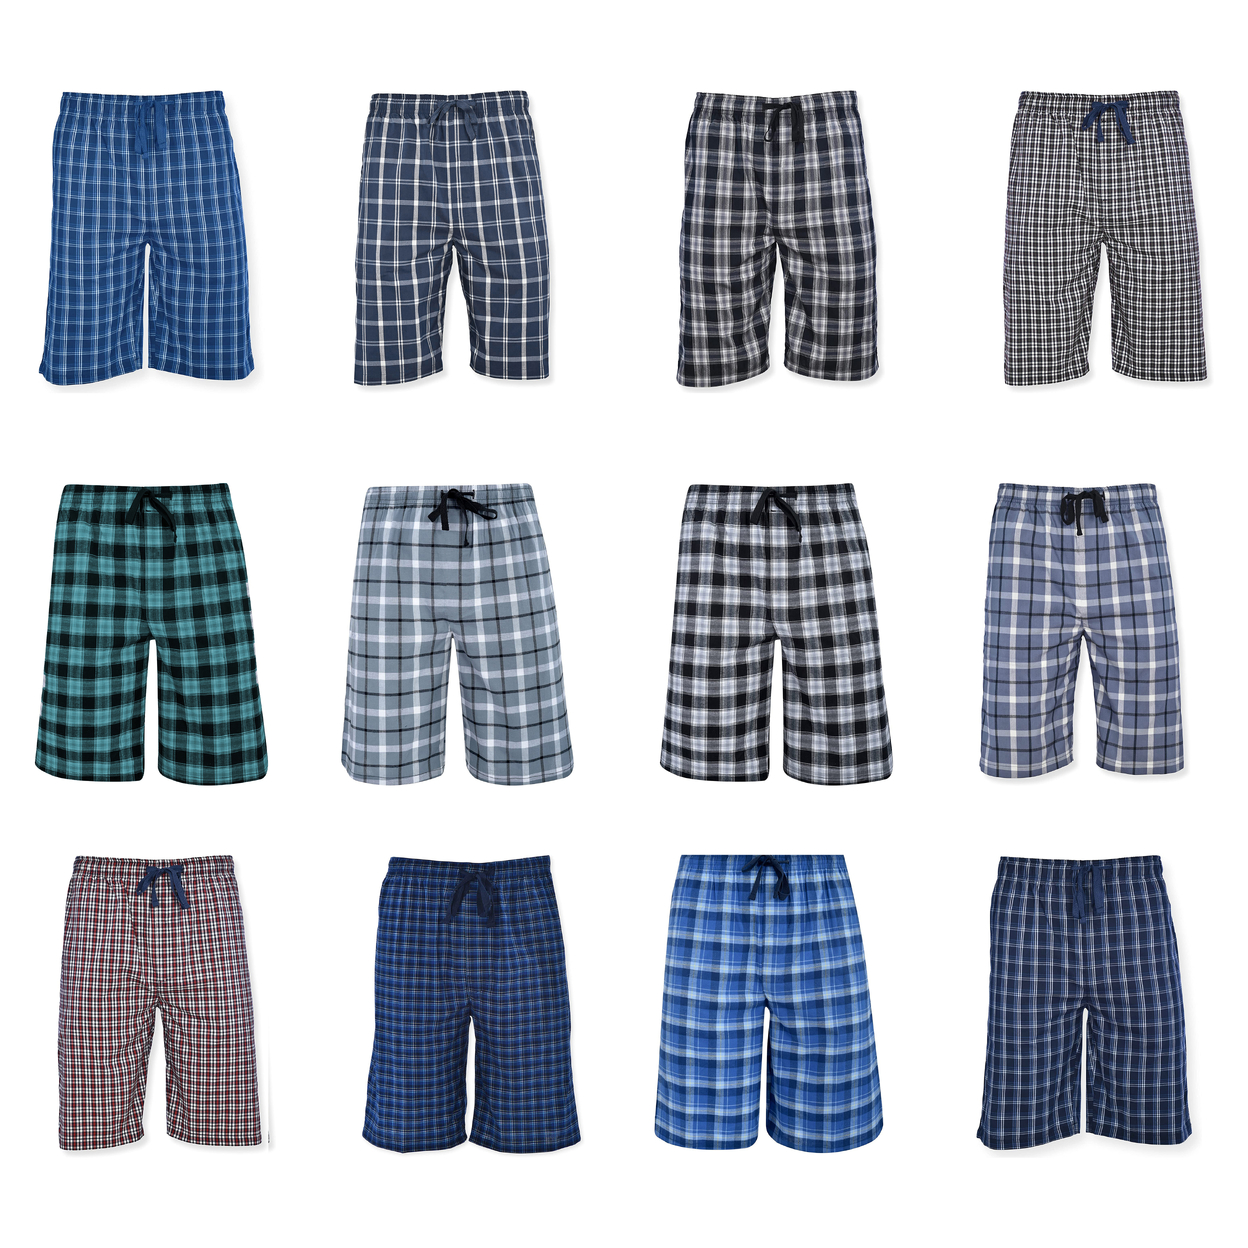 5-Pack: Men's Ultra Soft Plaid Lounge Pajama Sleep Wear Shorts - X-large